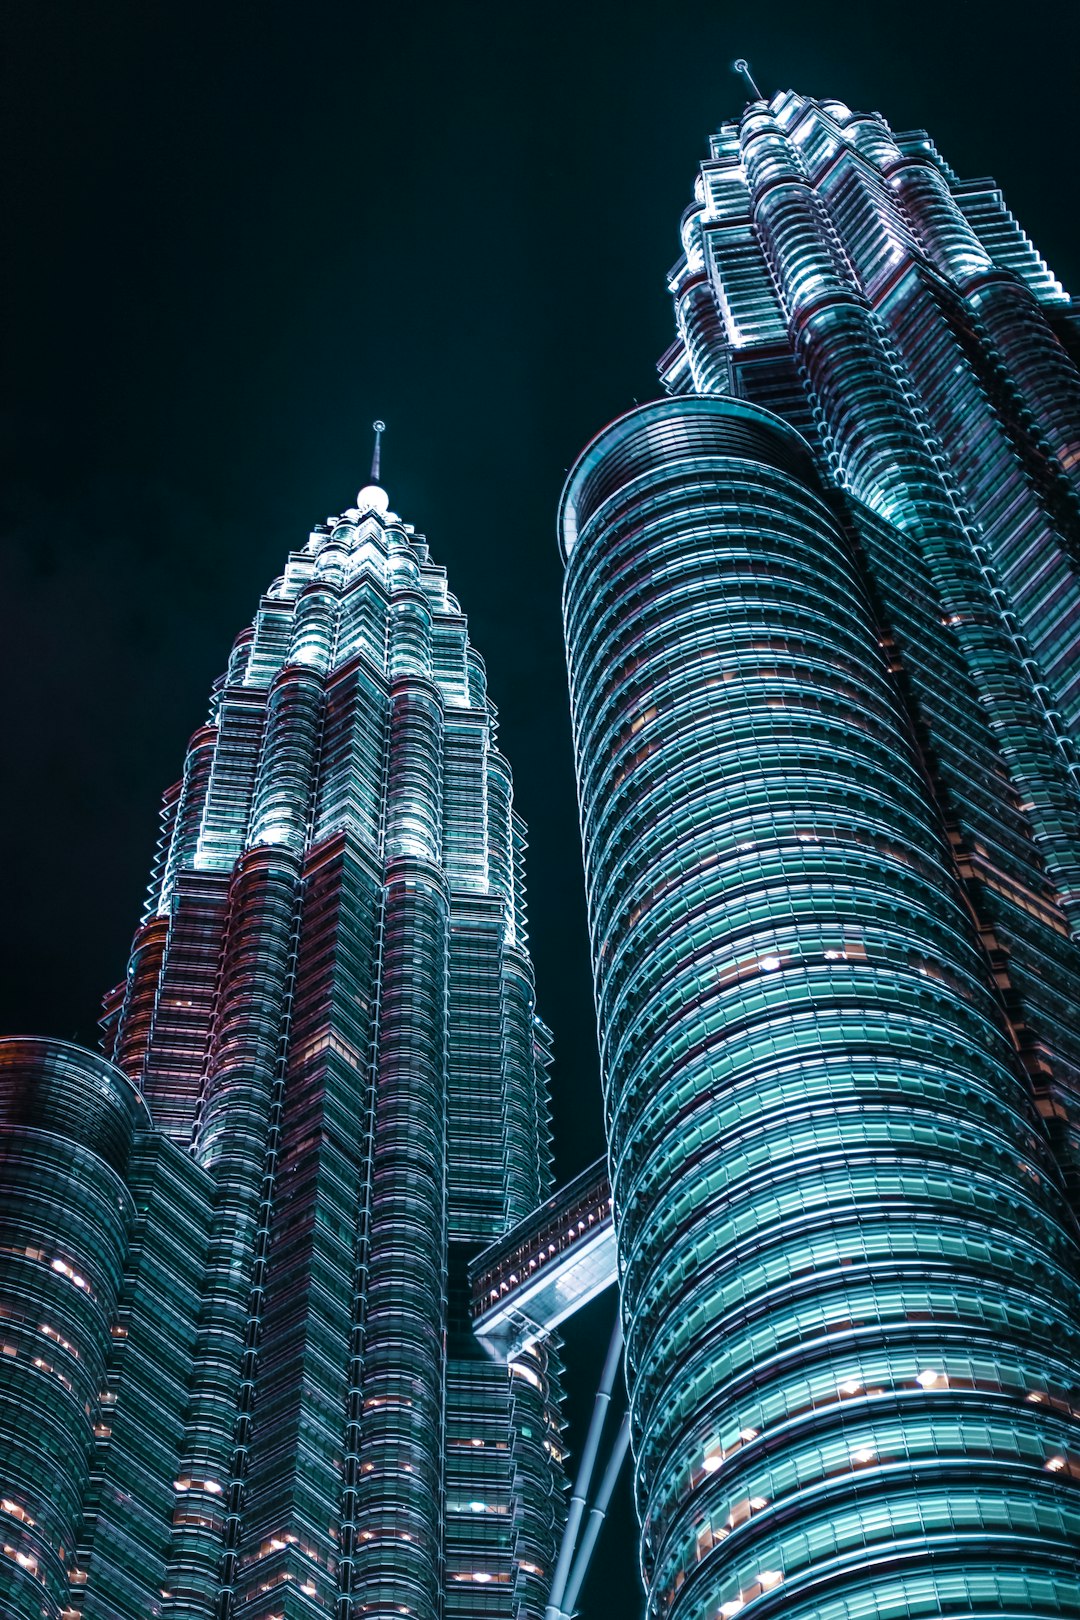 Landmark photo spot Kuala Lumpur City Centre Suria KLCC